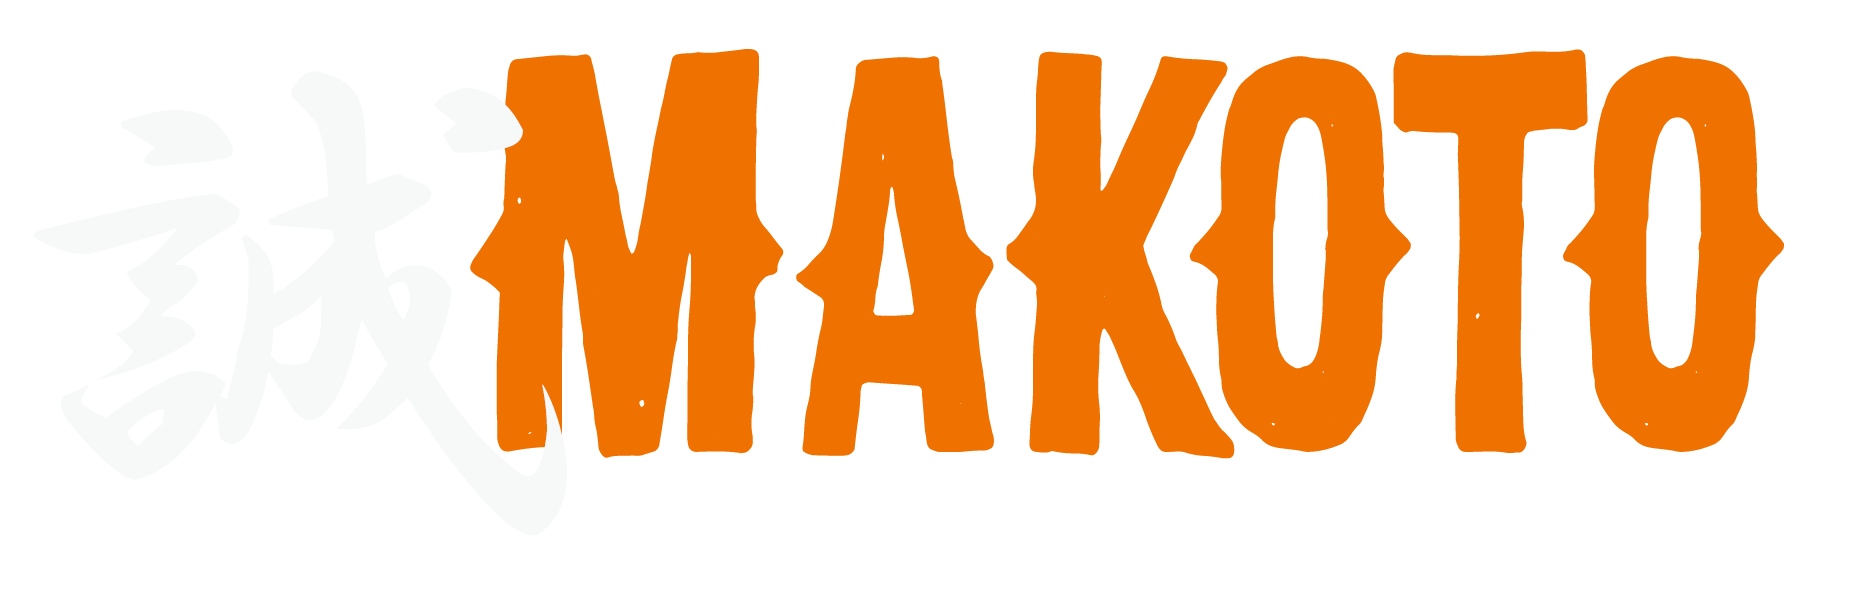 makoto logo